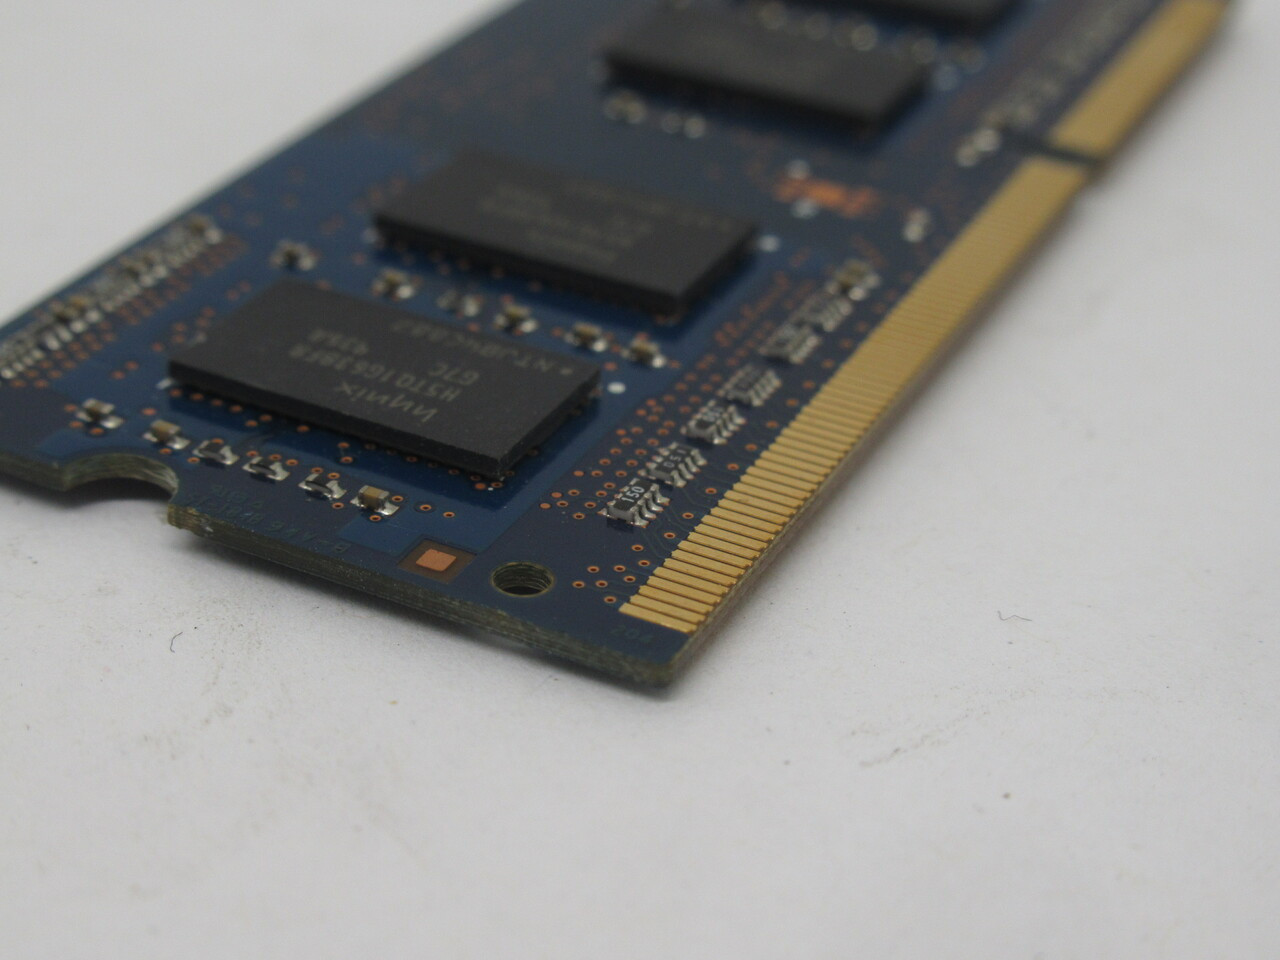 Hynix HMT112S6BFR6C-G7 N0 AA SDRam Memory Module 1GB 1066MHz USED